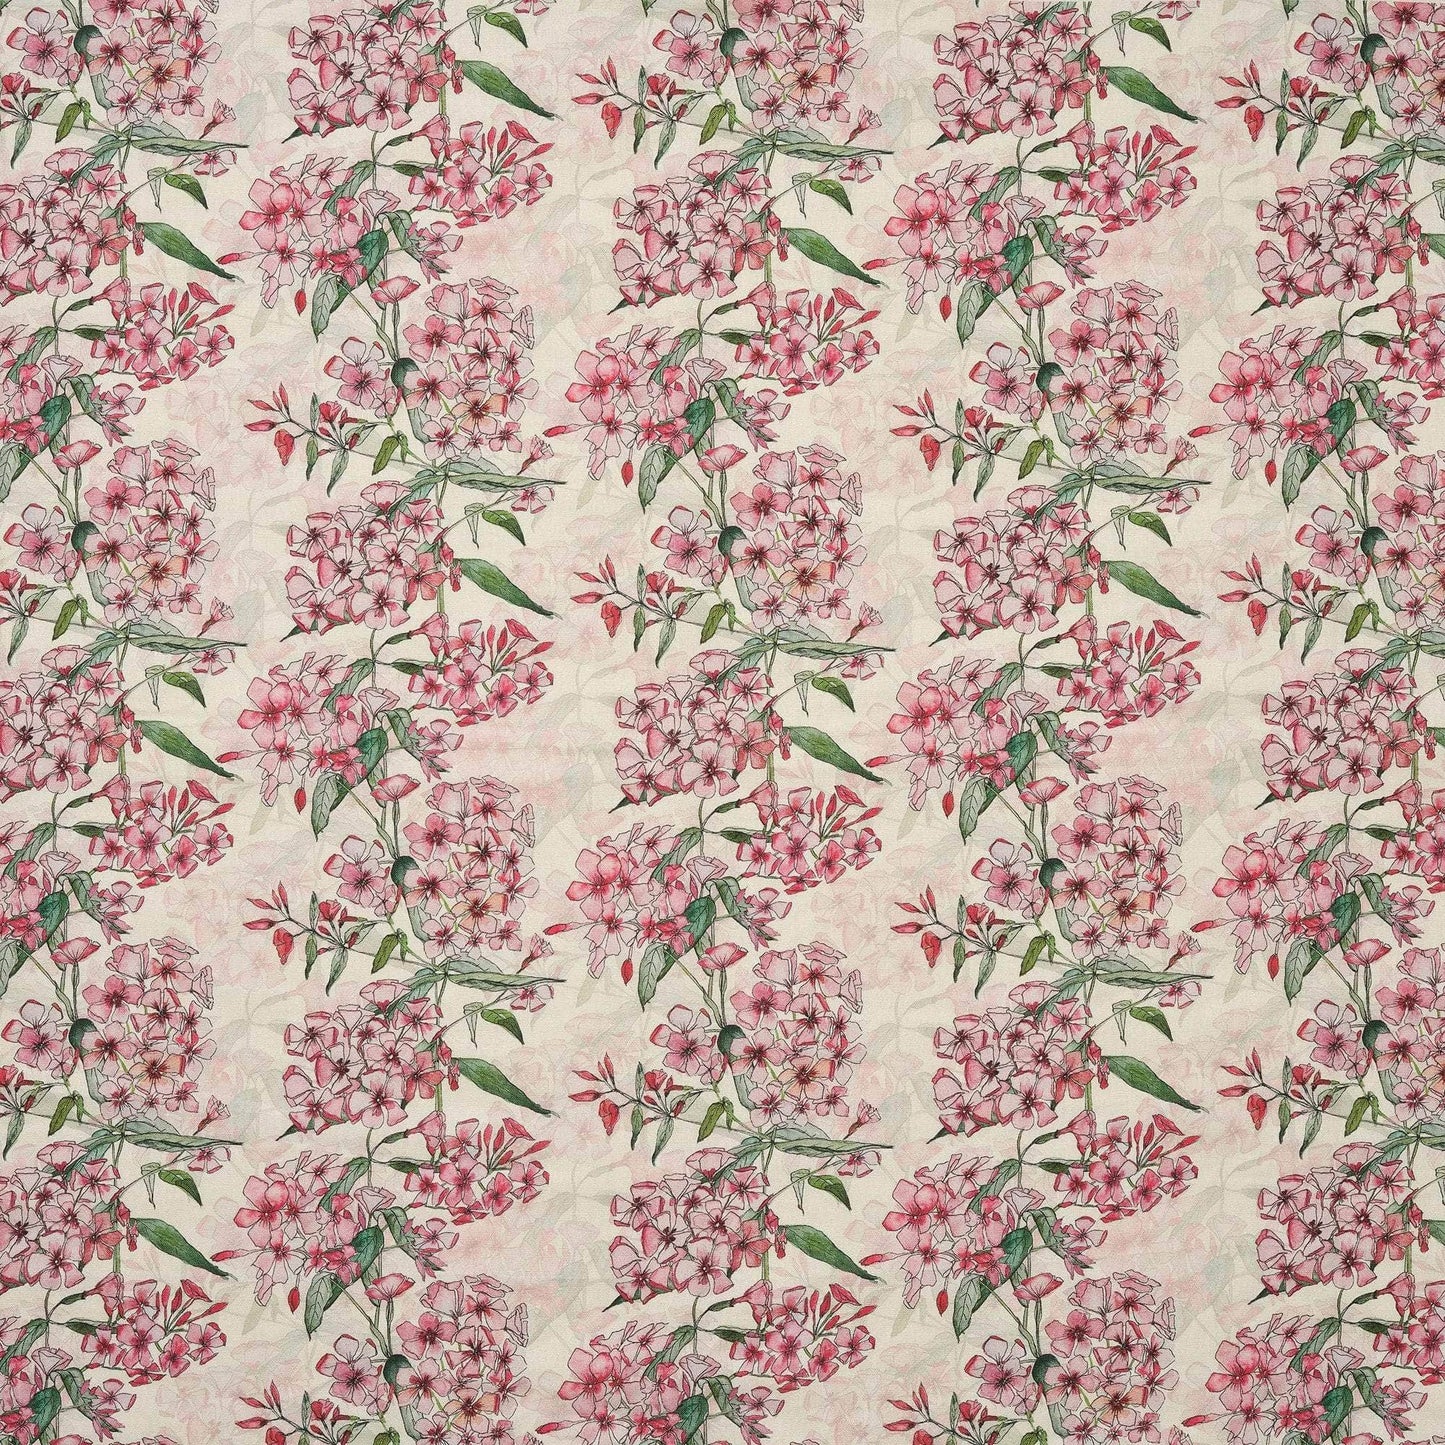 Pink Phlox Rows Fabric